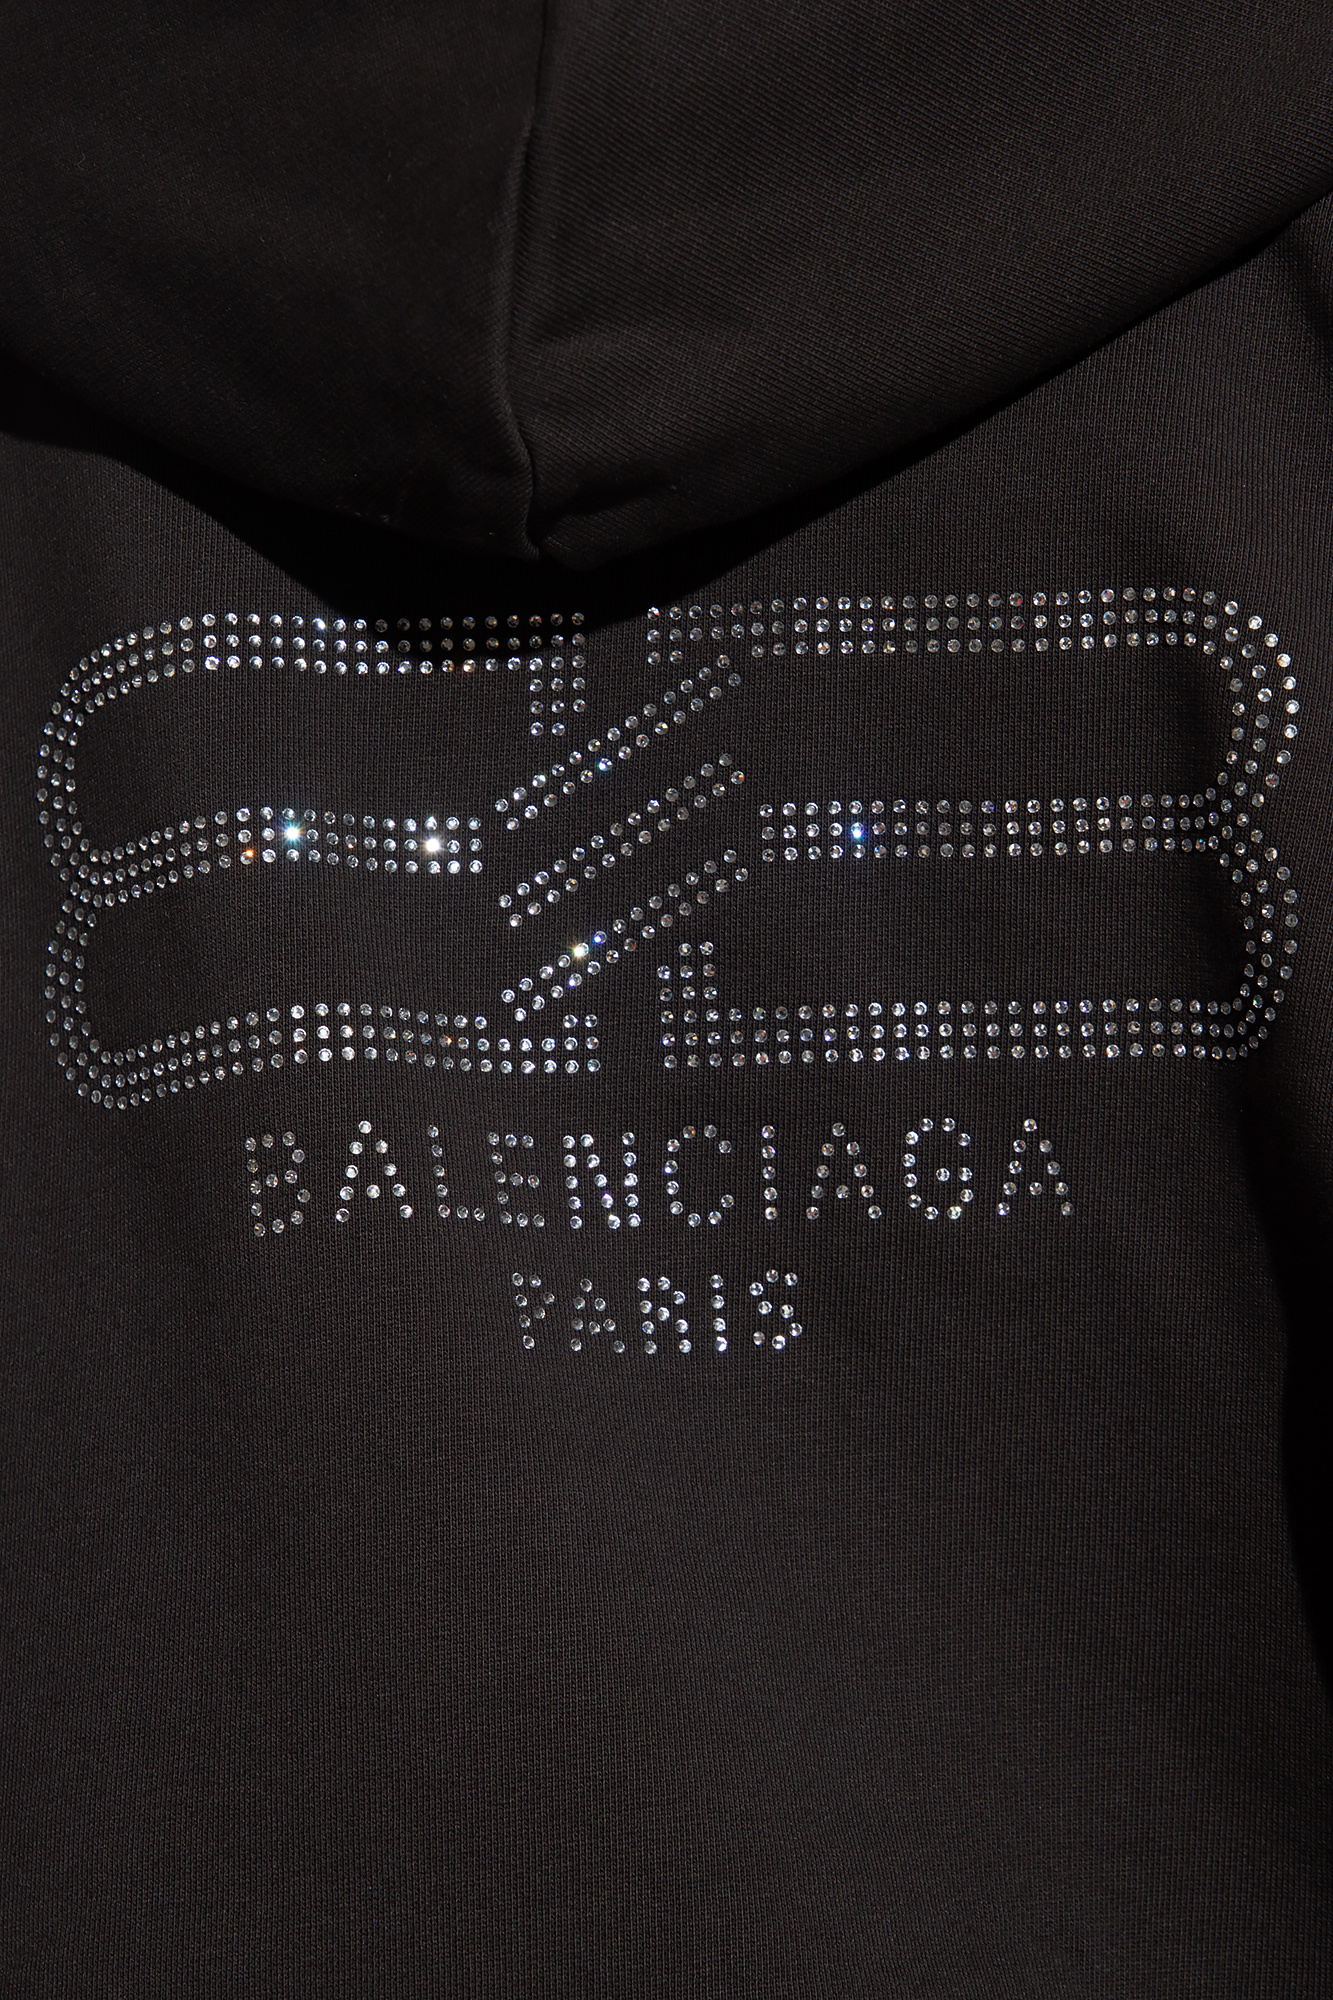 Balenciaga Zip-up hoodie